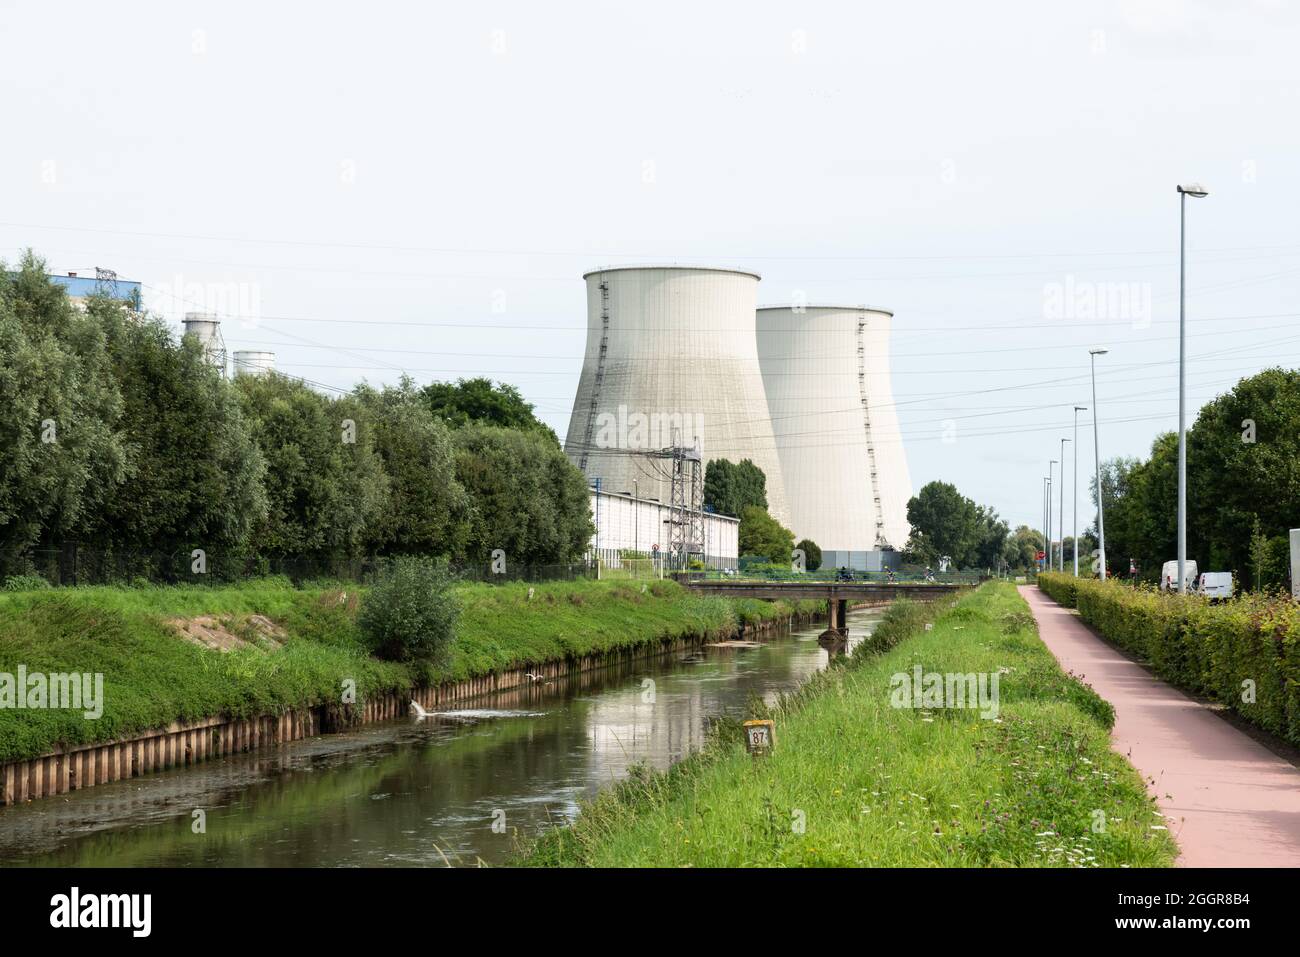 Vilvoorde, Flemish Brabant Region - Belgium - 08 24 2021: Camino di un reattore di energia abandonnes di Engie Electrabel Foto Stock